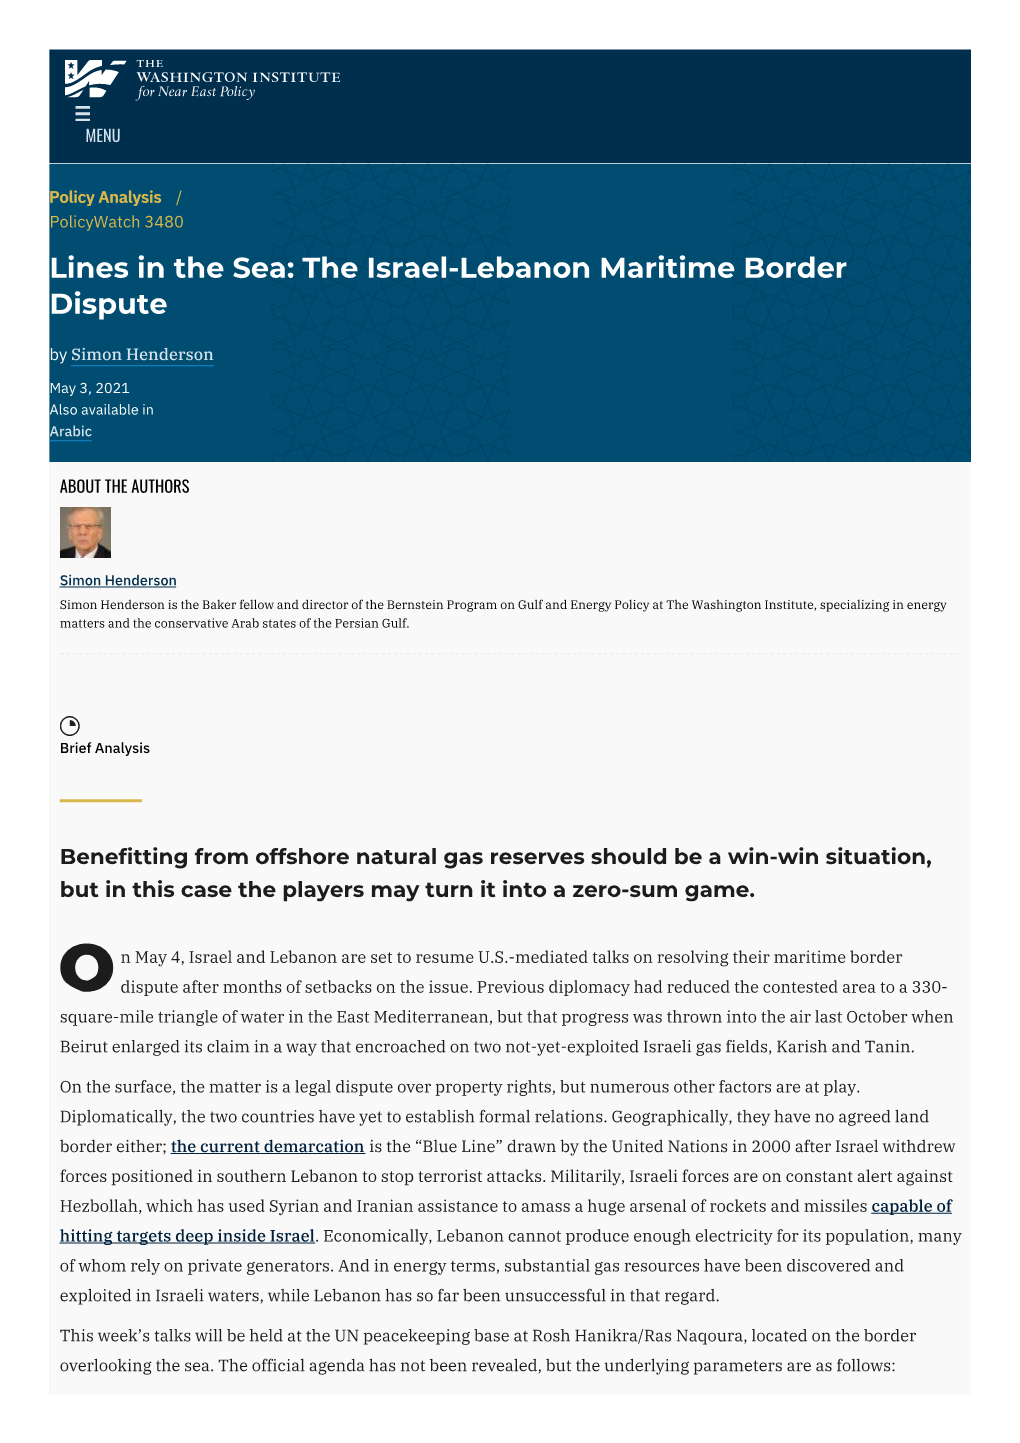 The Israel-Lebanon Maritime Border Dispute by Simon Henderson